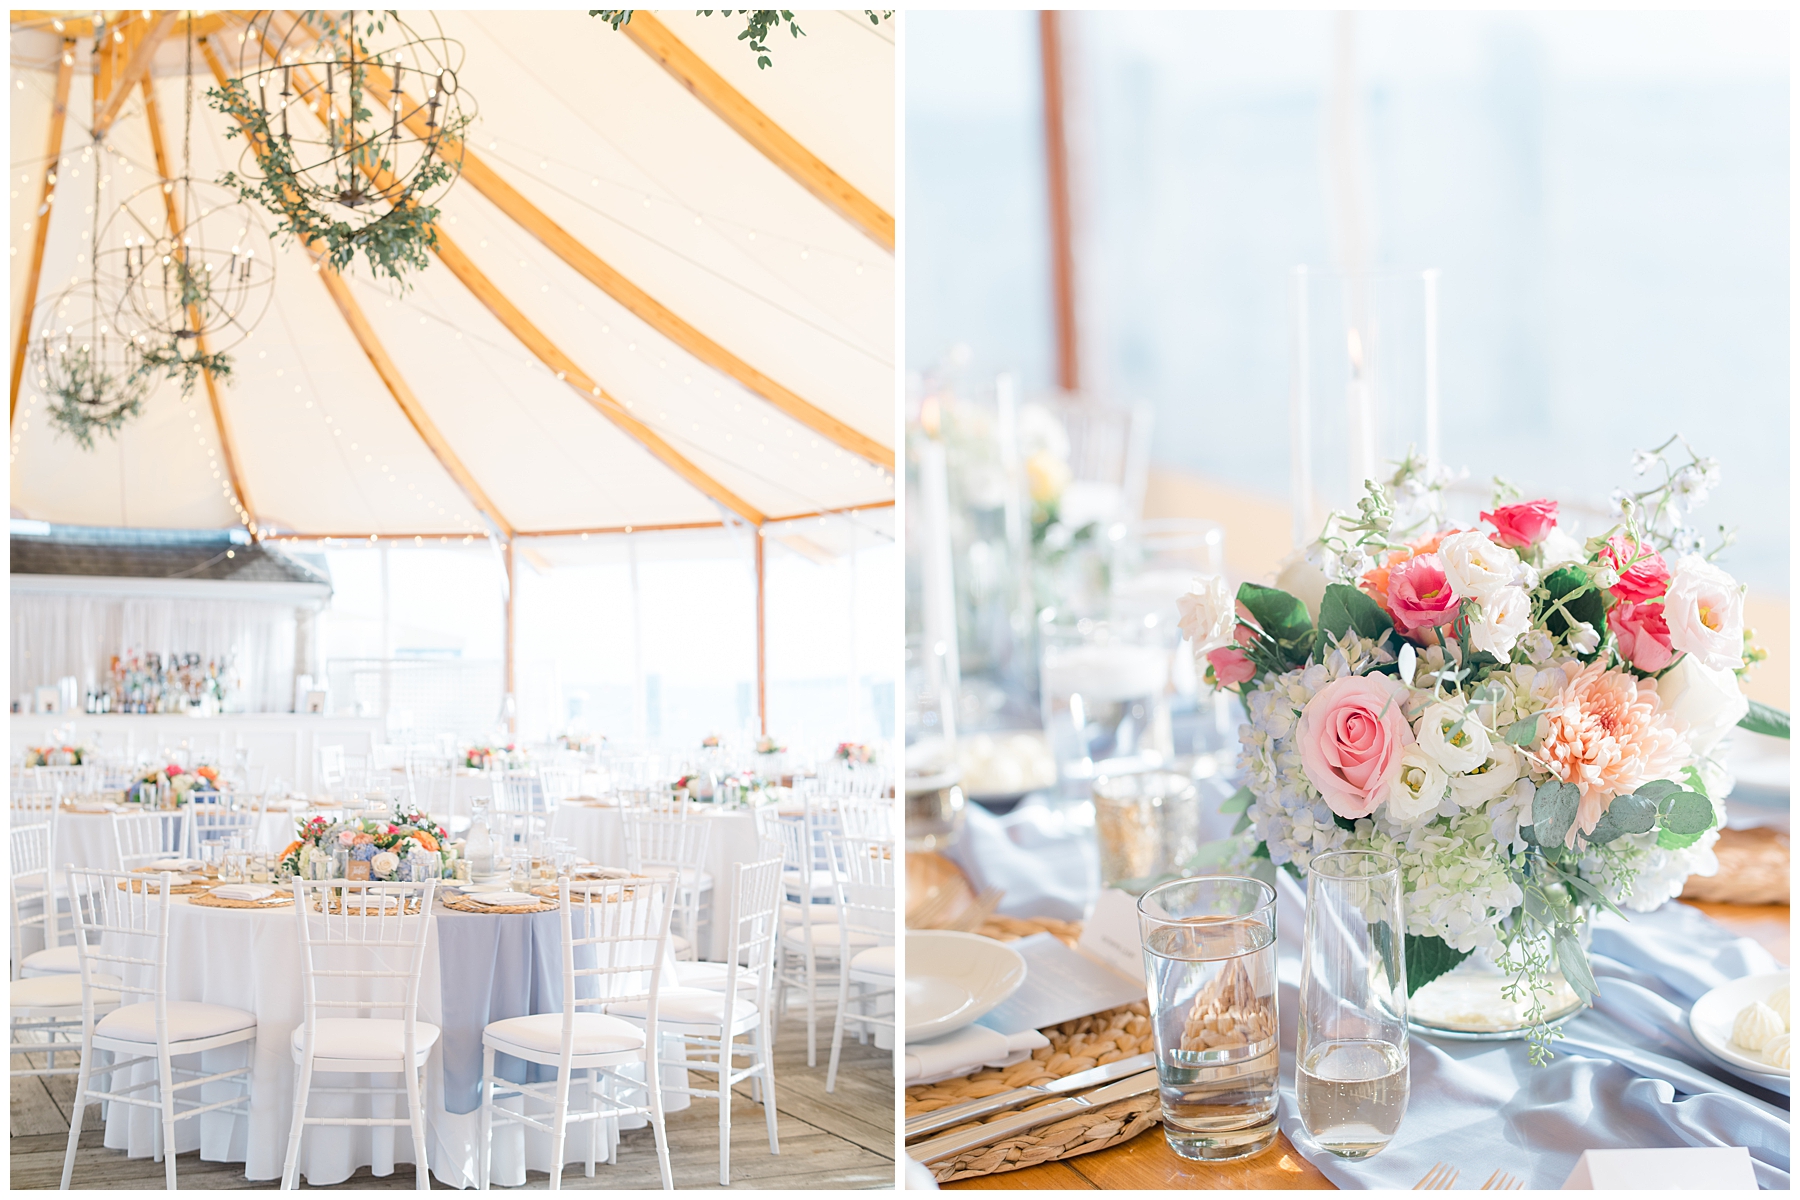 floral centerpieces and wedding reception details